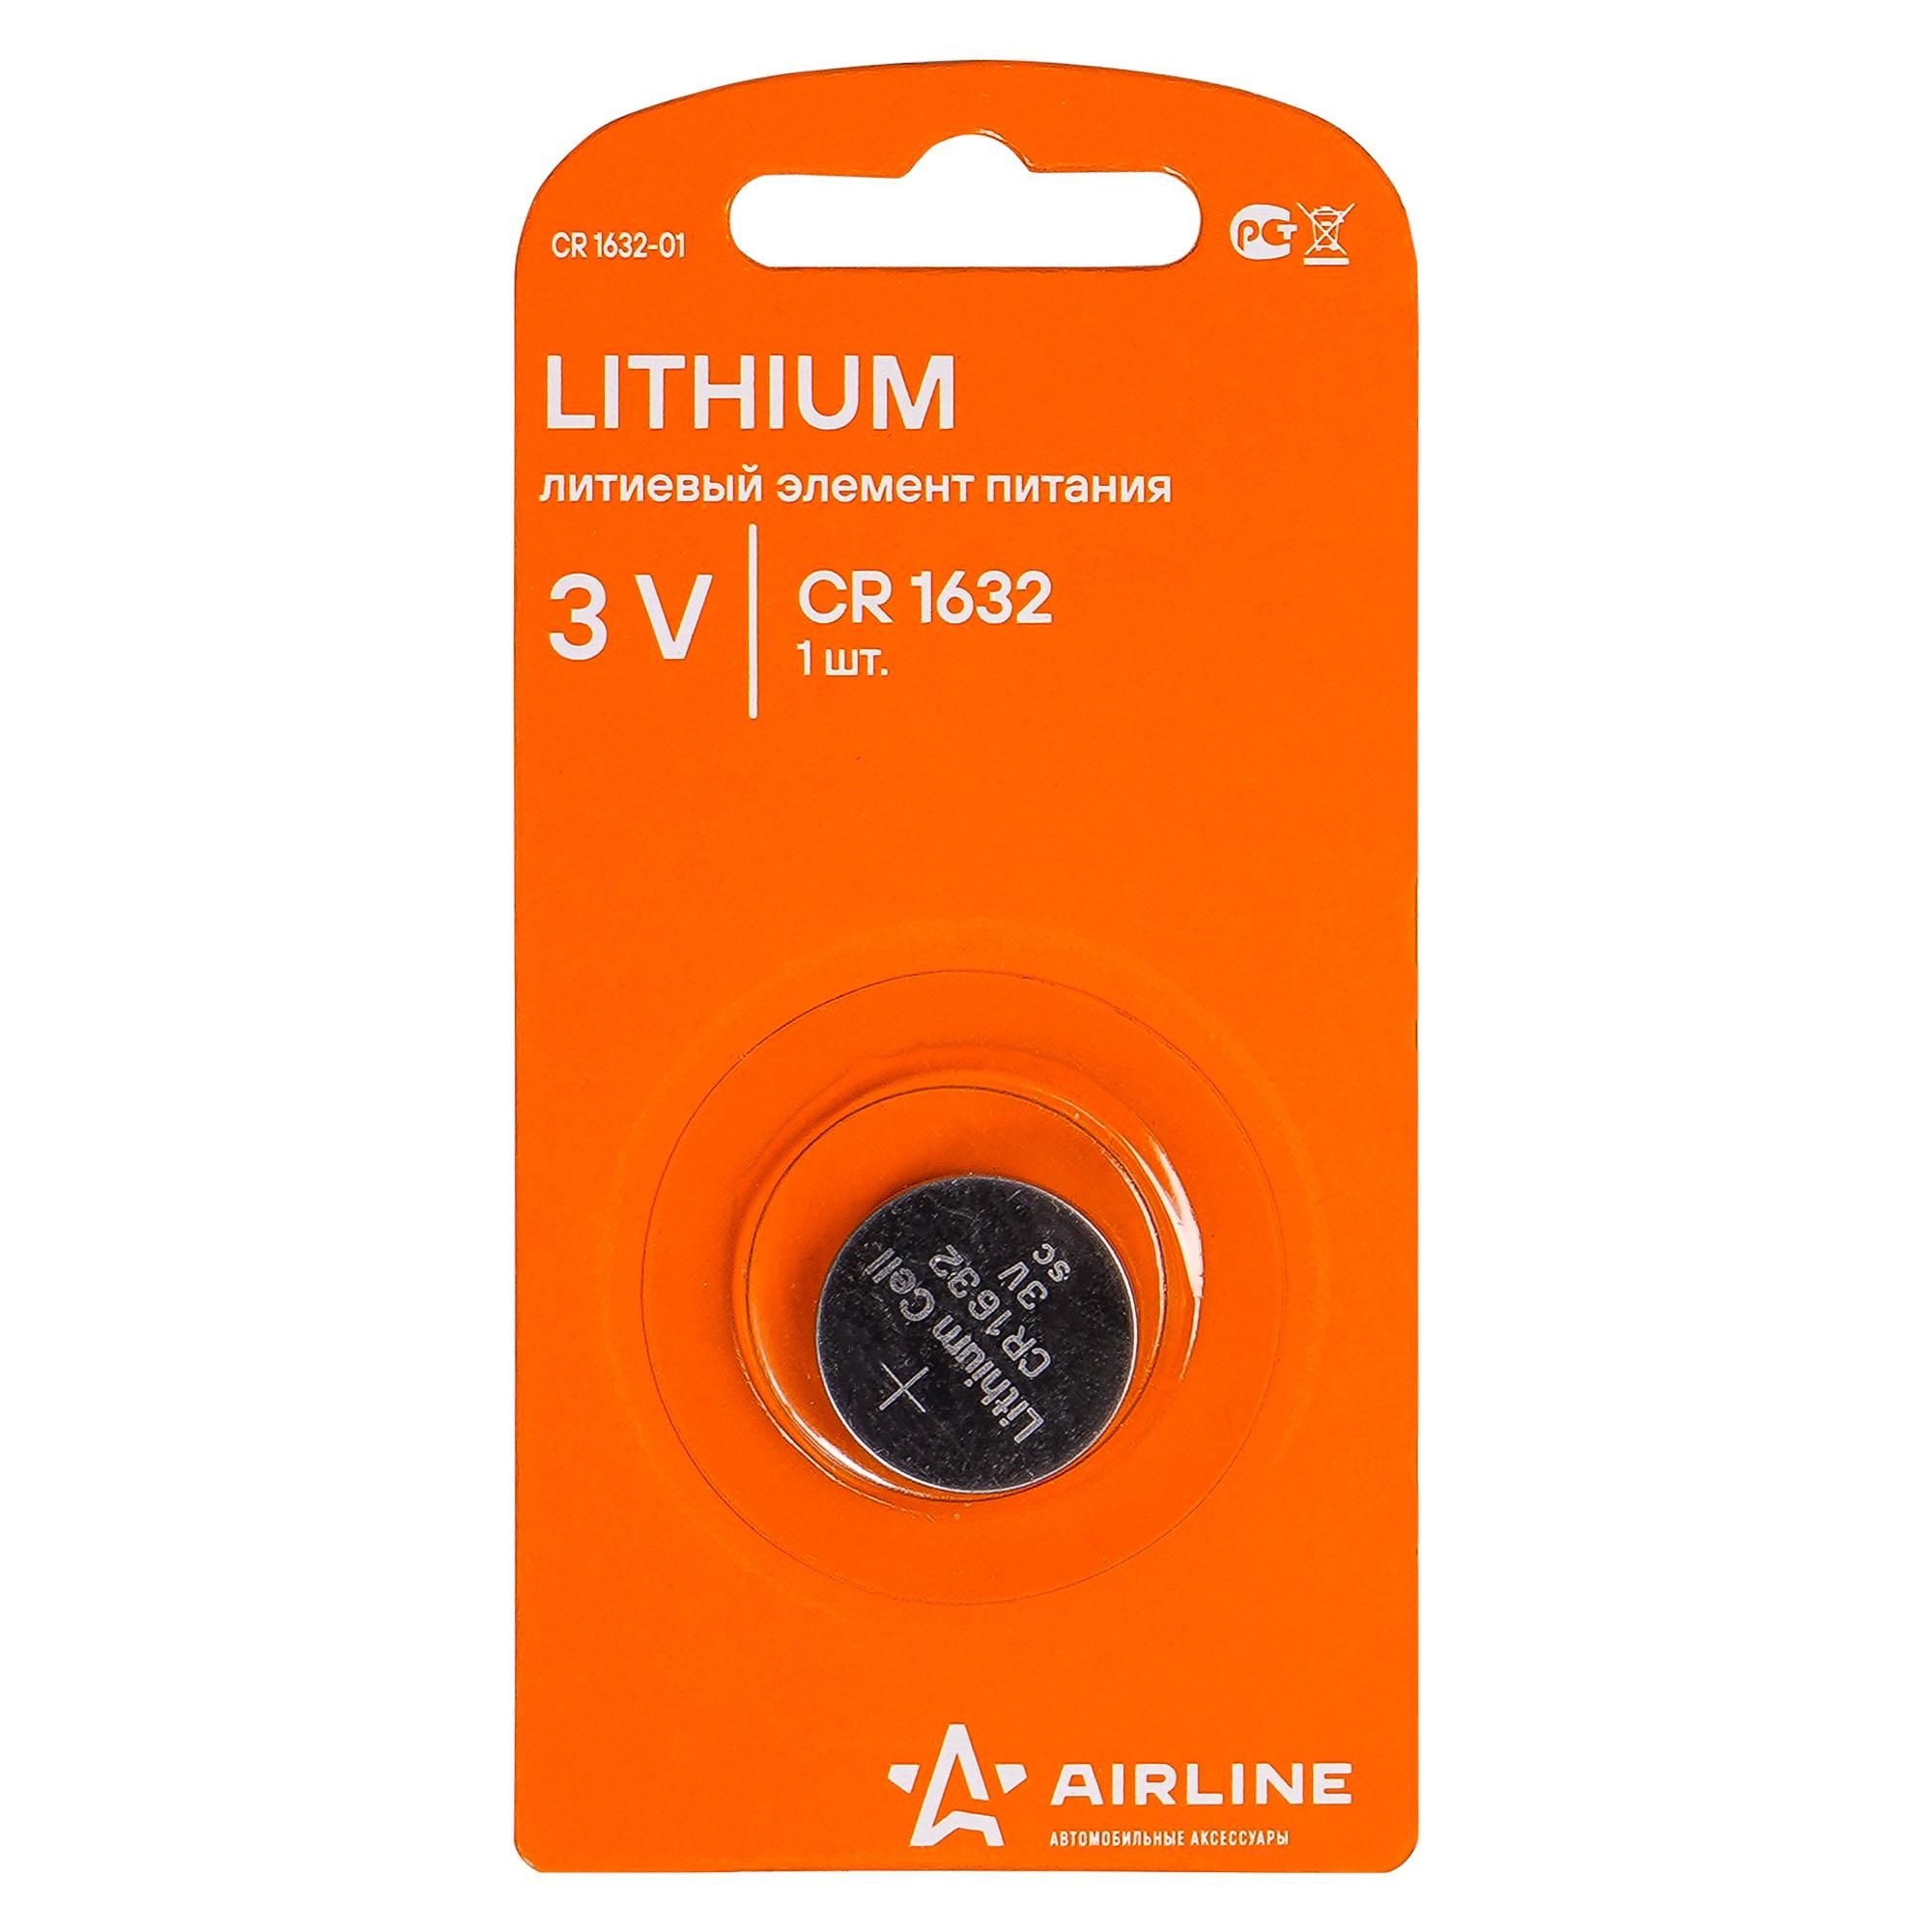 AIRLINE CR163201 Батарейка CR1632 3V для брелоков сигнализаций литиевая 1 шт. (CR1632-01) алкалиновая батарейка для сигнализаций sonnen